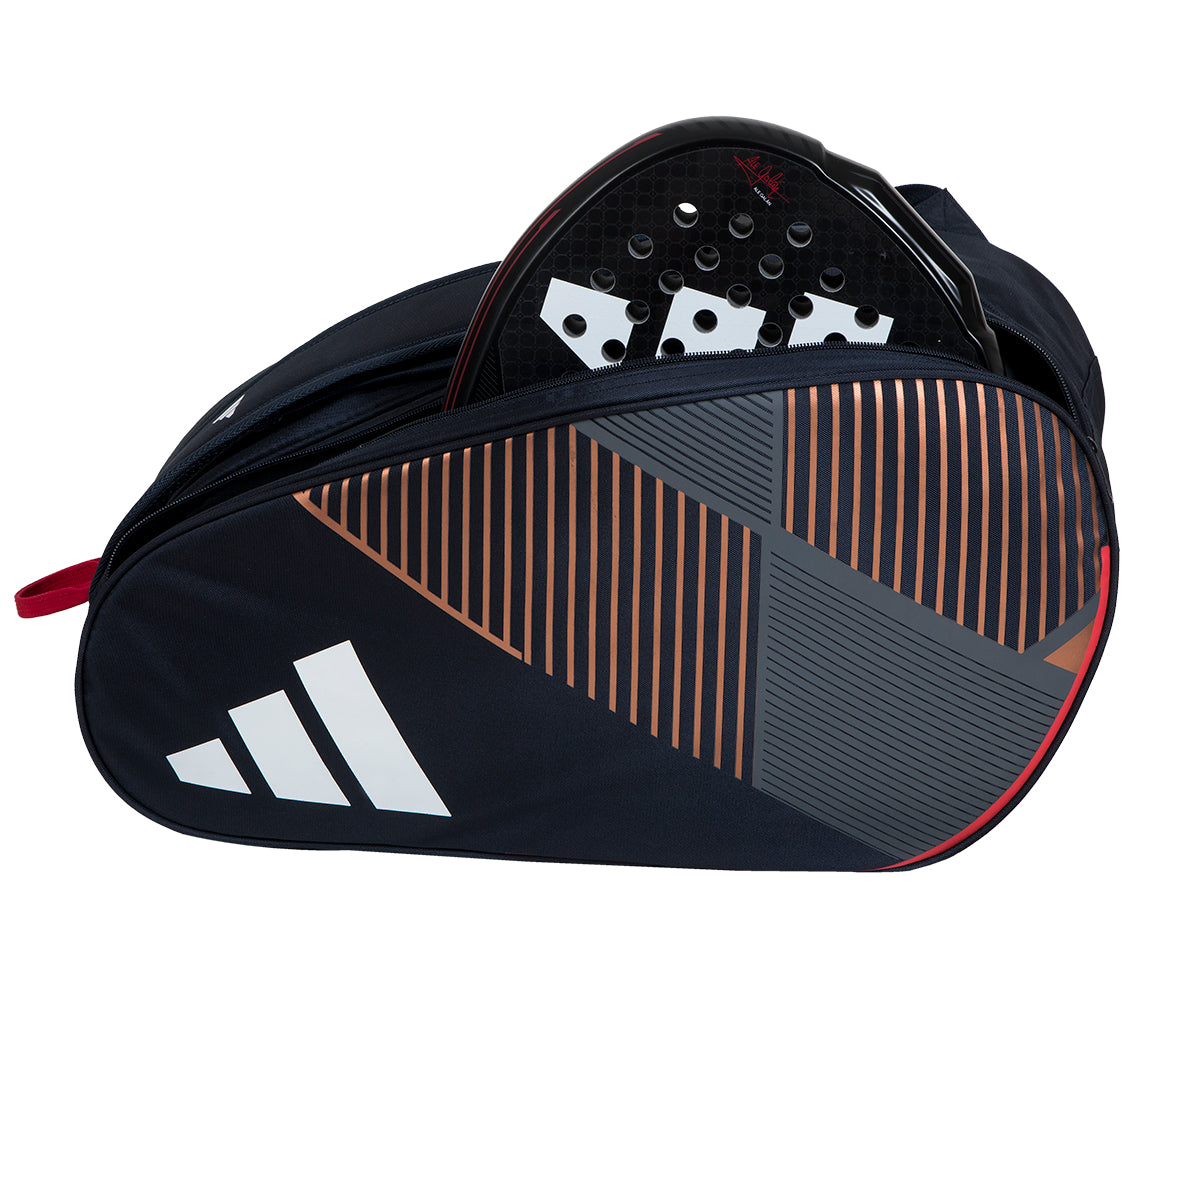 Adidas Control 3.3 Racket Bag